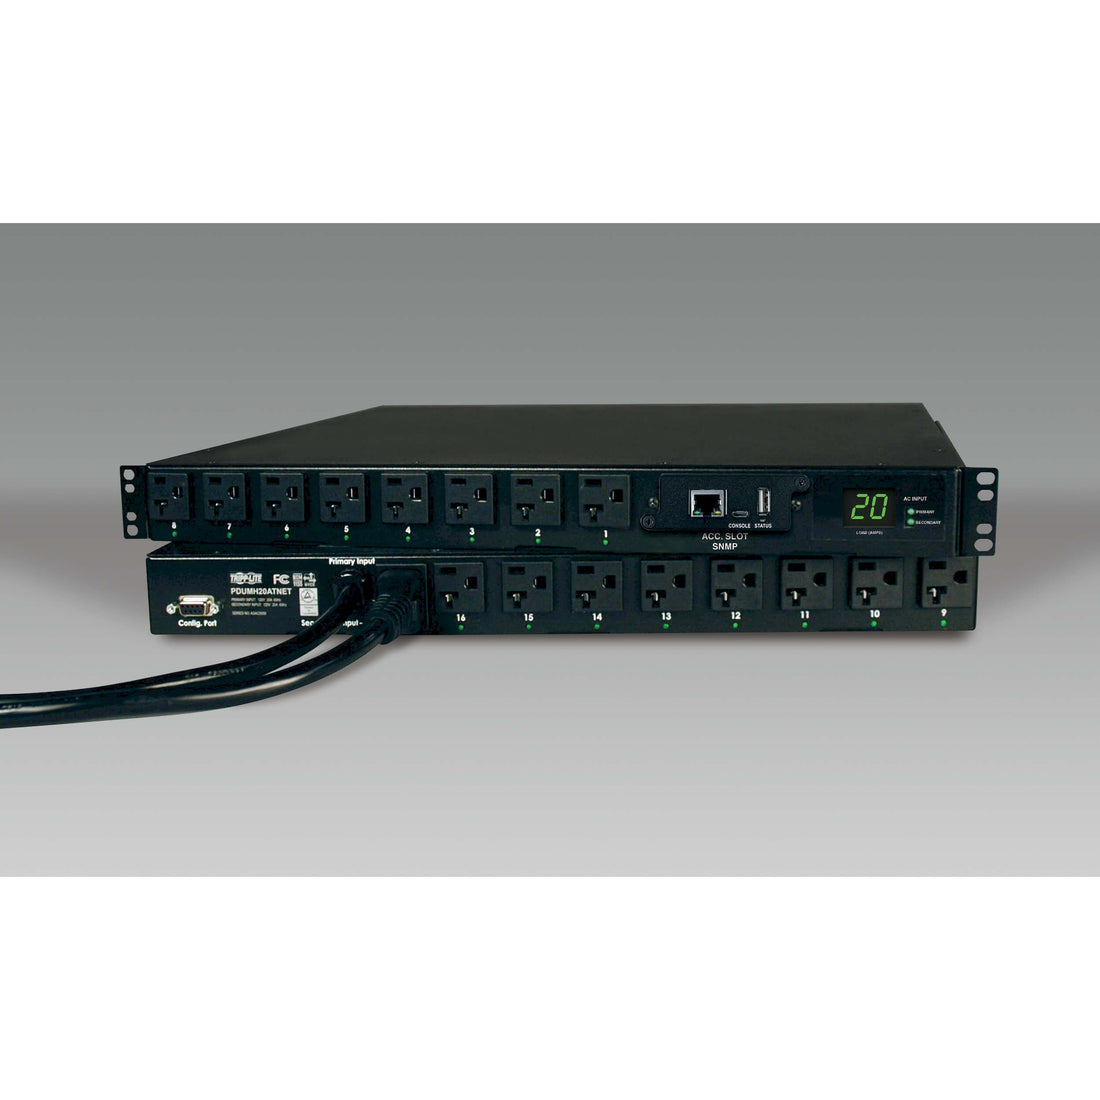 Eaton/Tripp Lite 1.9kW 120V 1U Single Phase Automatic Transfer Switch PDU (PDUMH20ATNET)